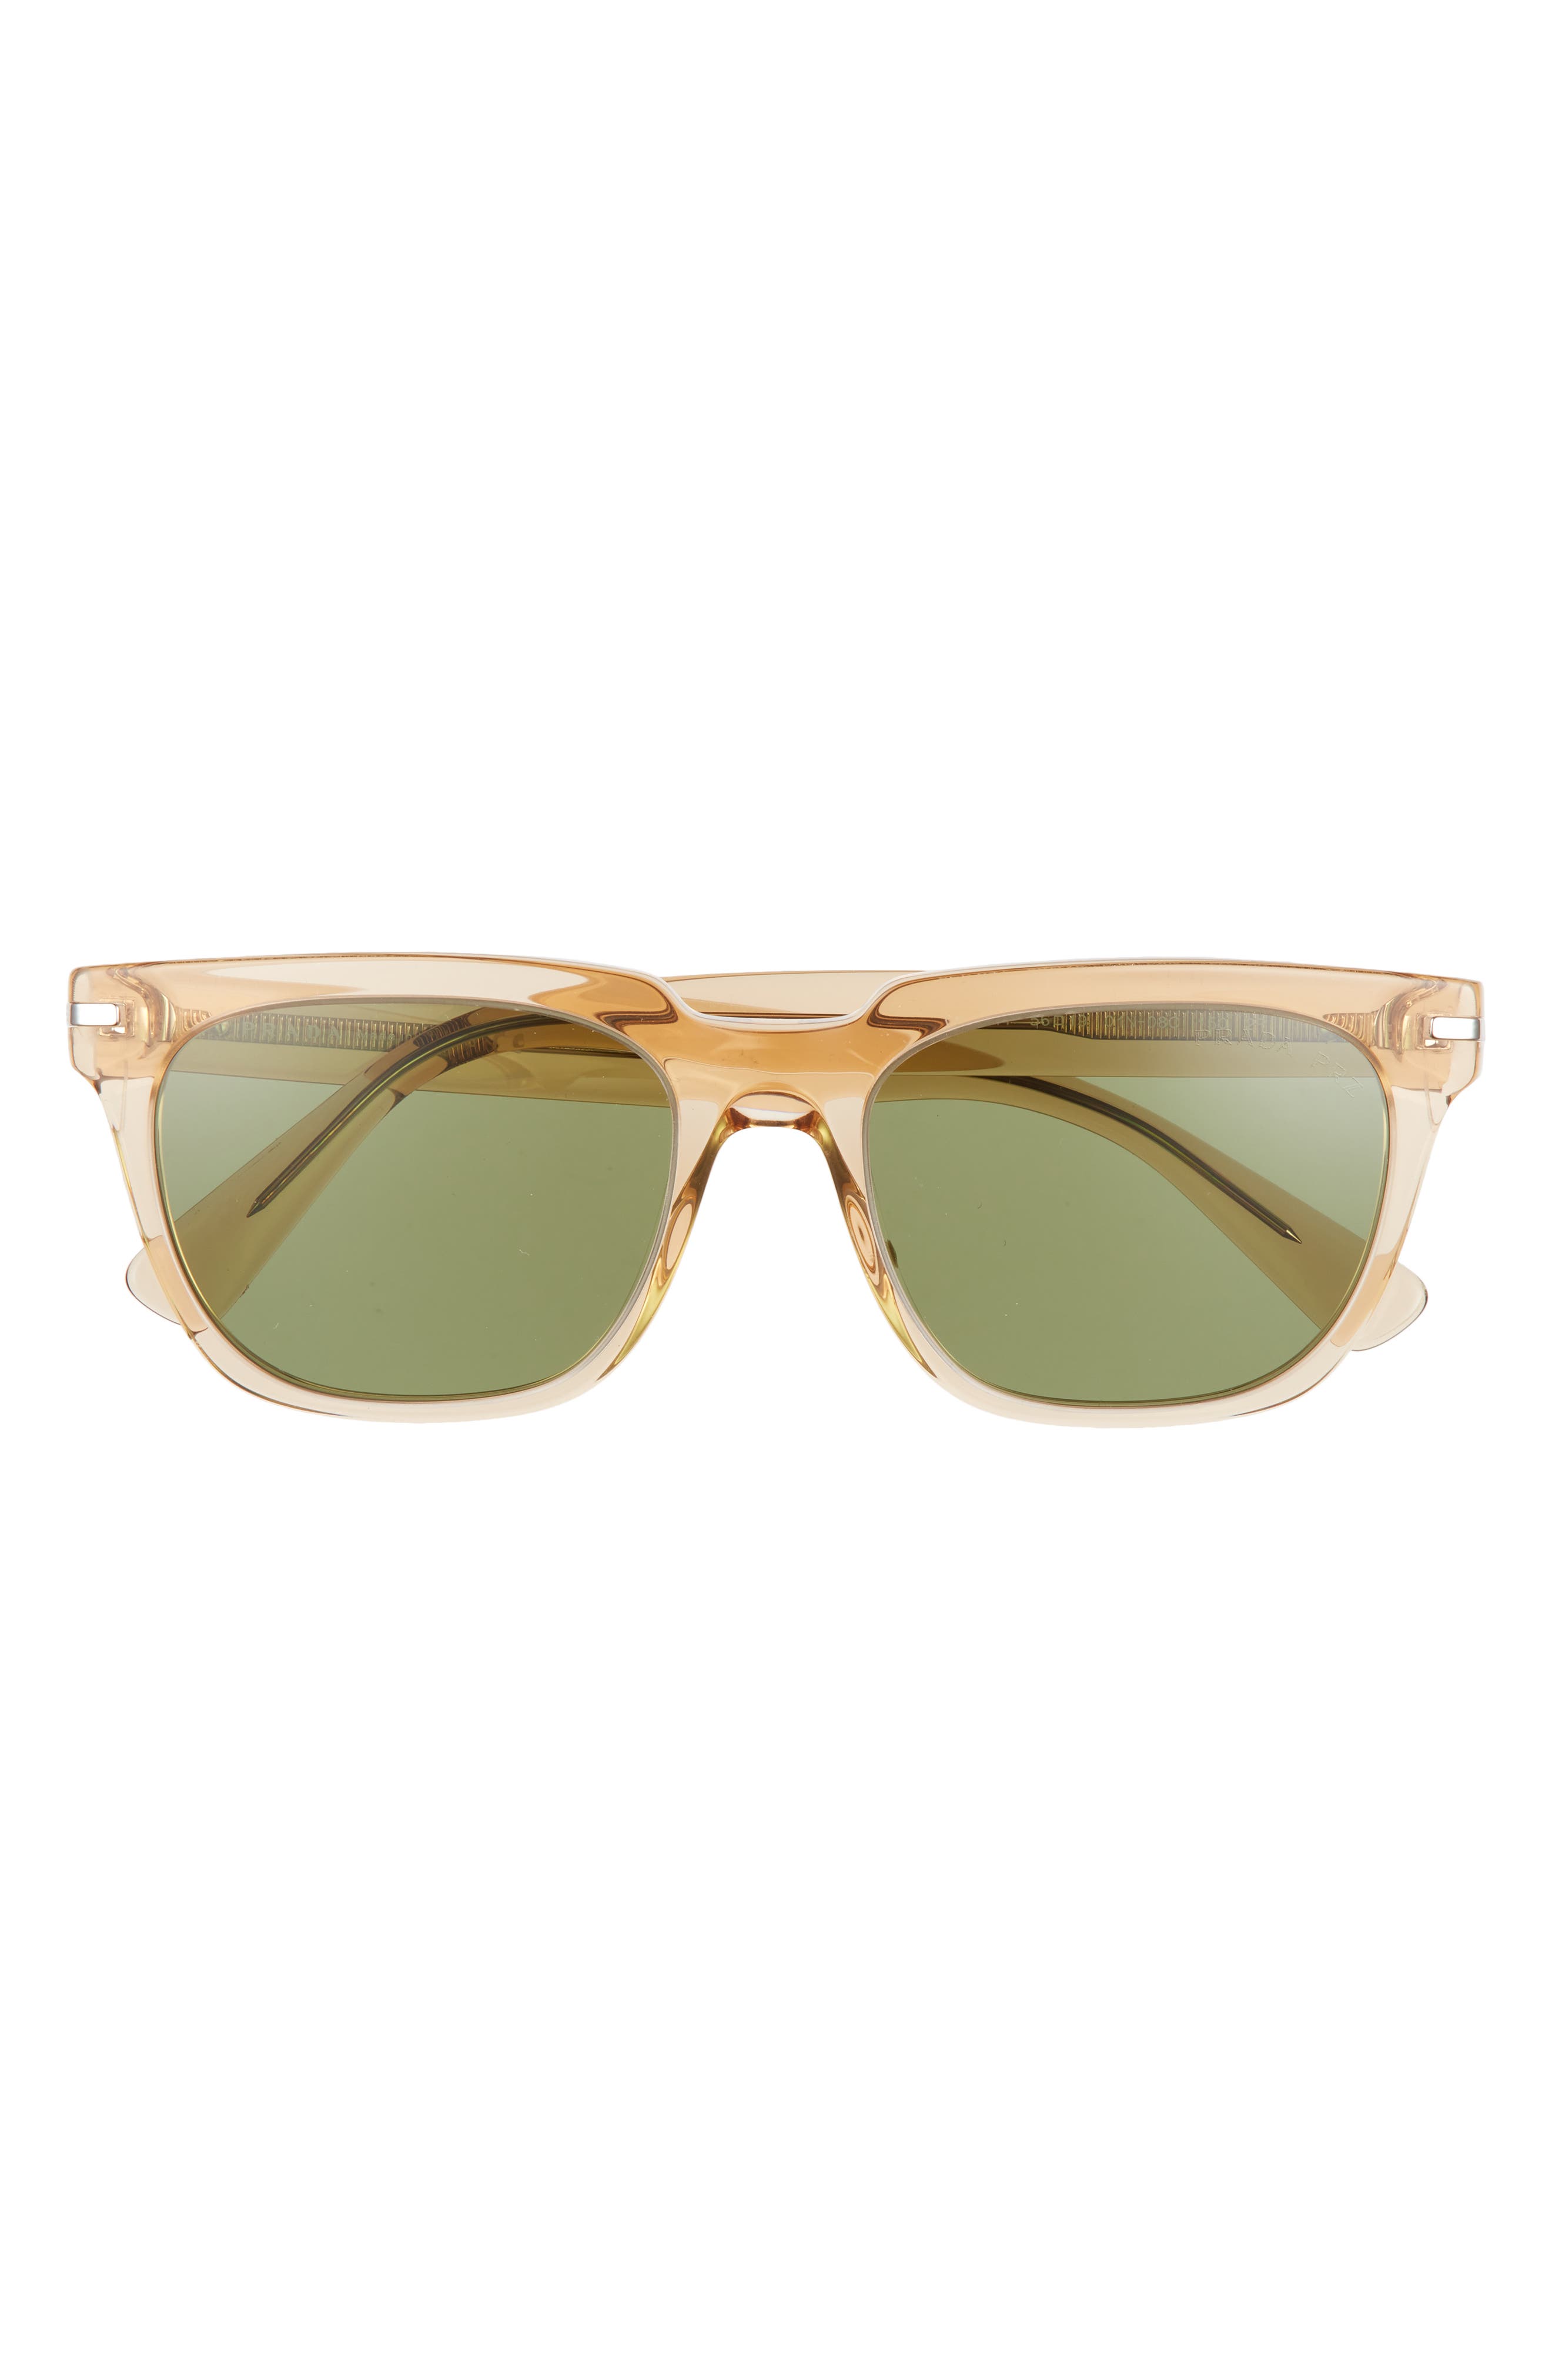 Prada 56mm Transparent Pillow Sunglasses in Transparent Brown/Polar Green at Nordstrom